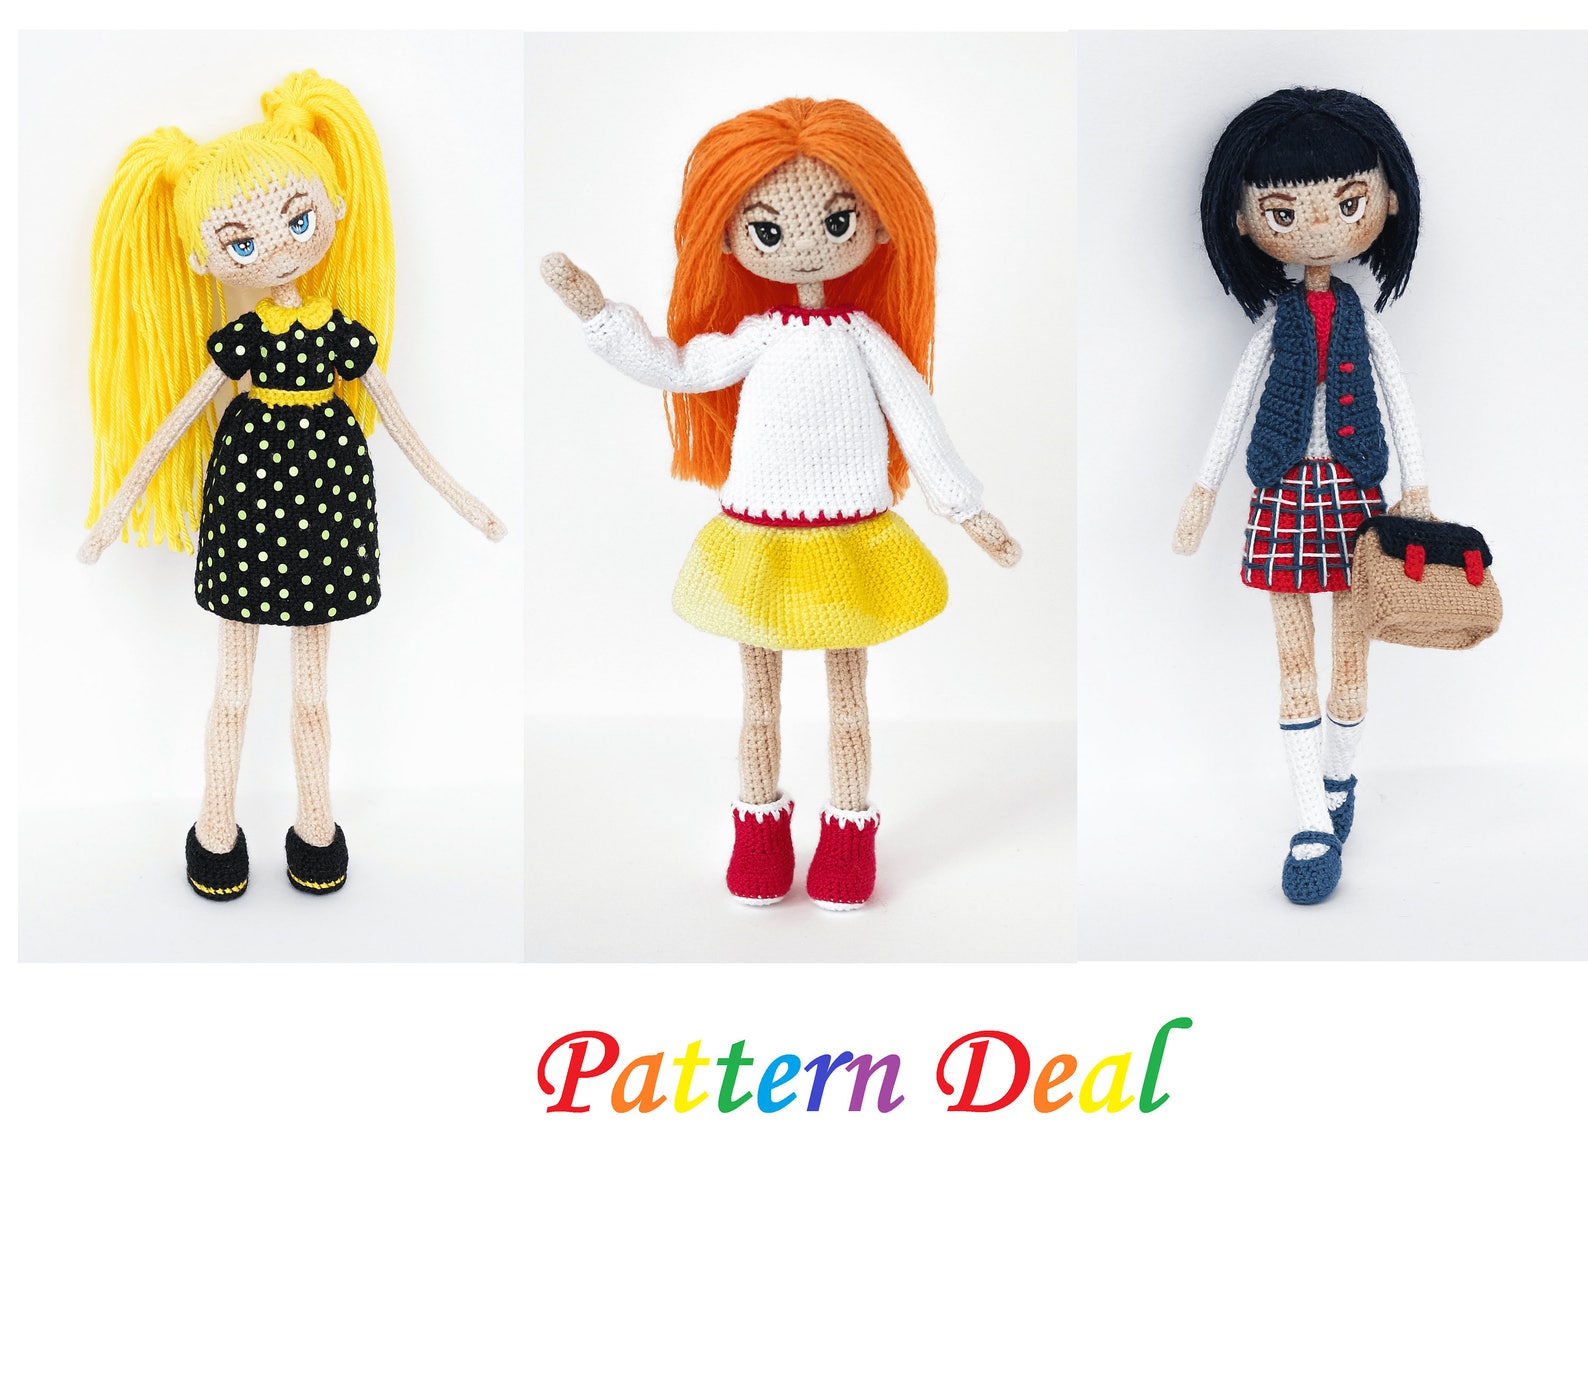 Pattern Deal Doll Alex Doll Nikki and Doll Schollgirl | Etsy